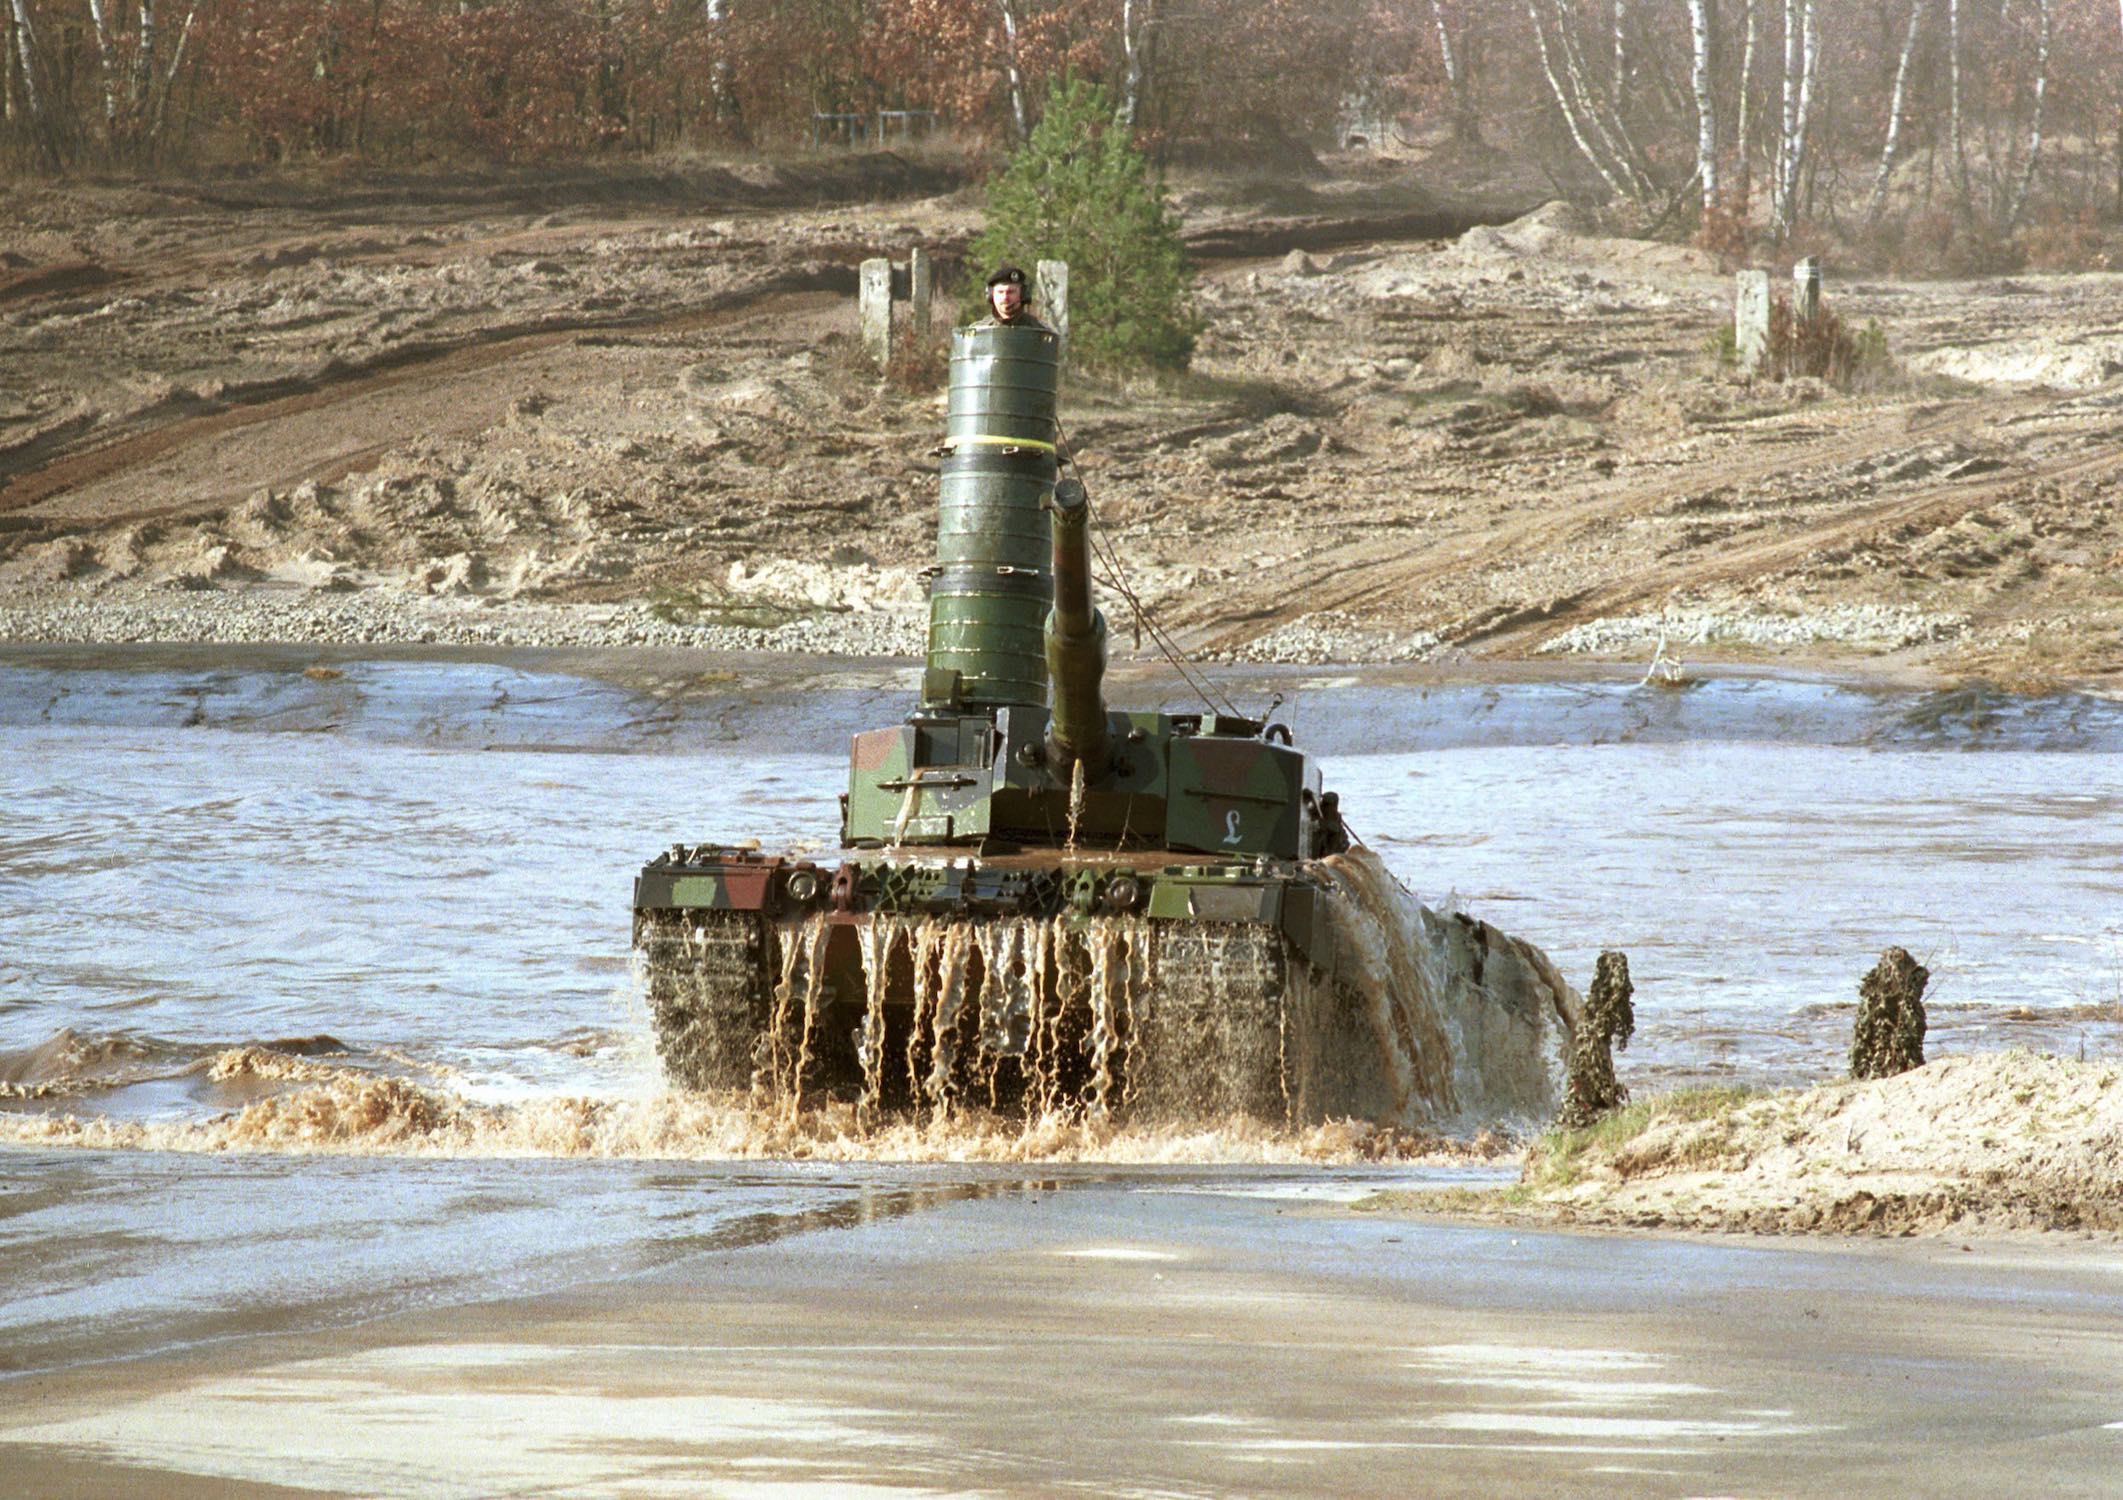 German Leopard 2 tank with turret snorkel